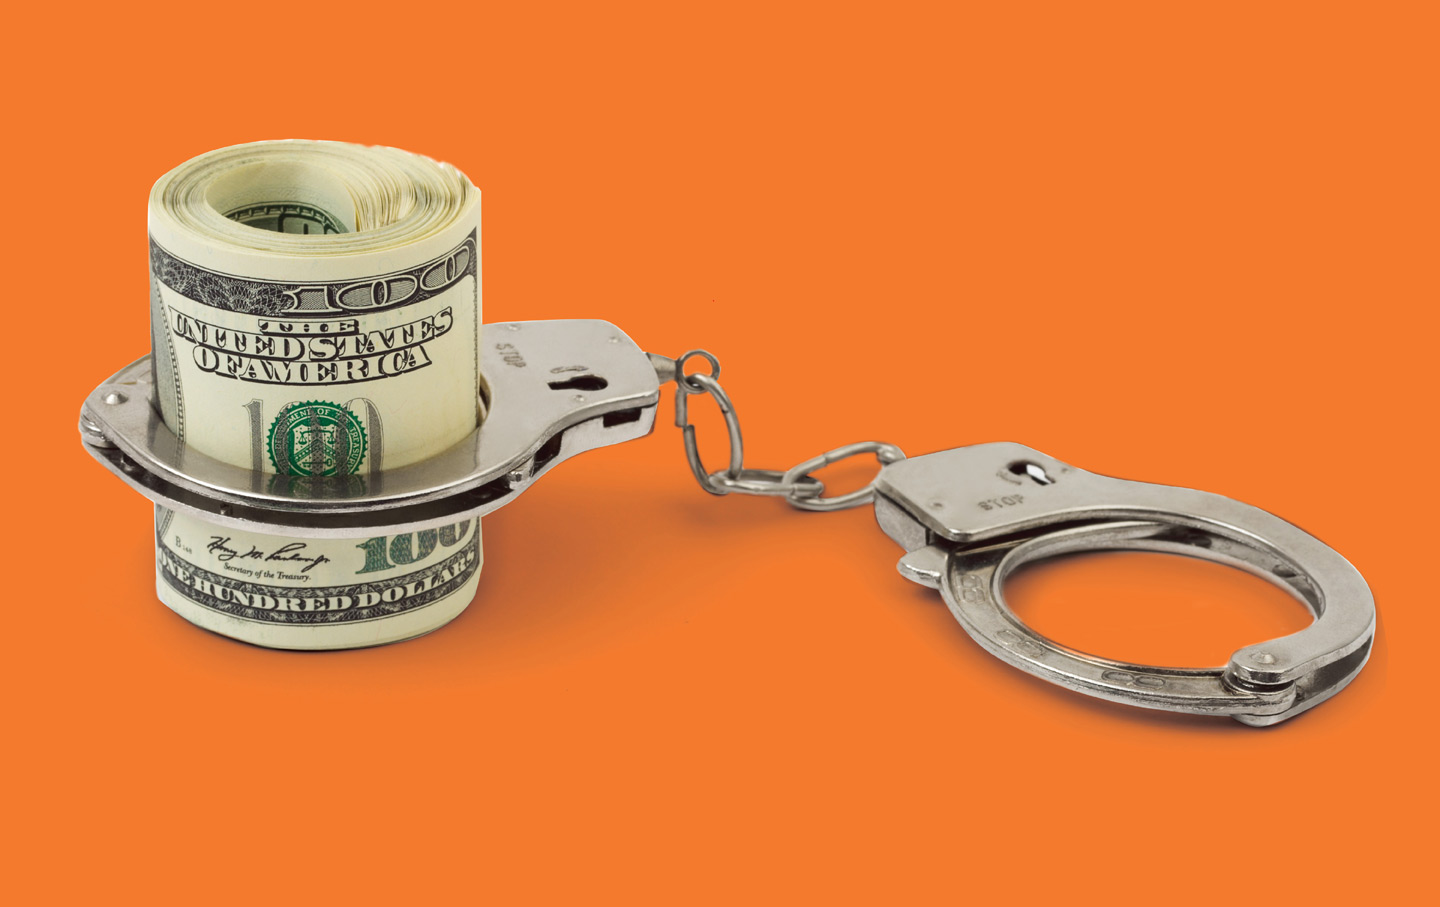 Handcuffs around a roll of money and an orange background